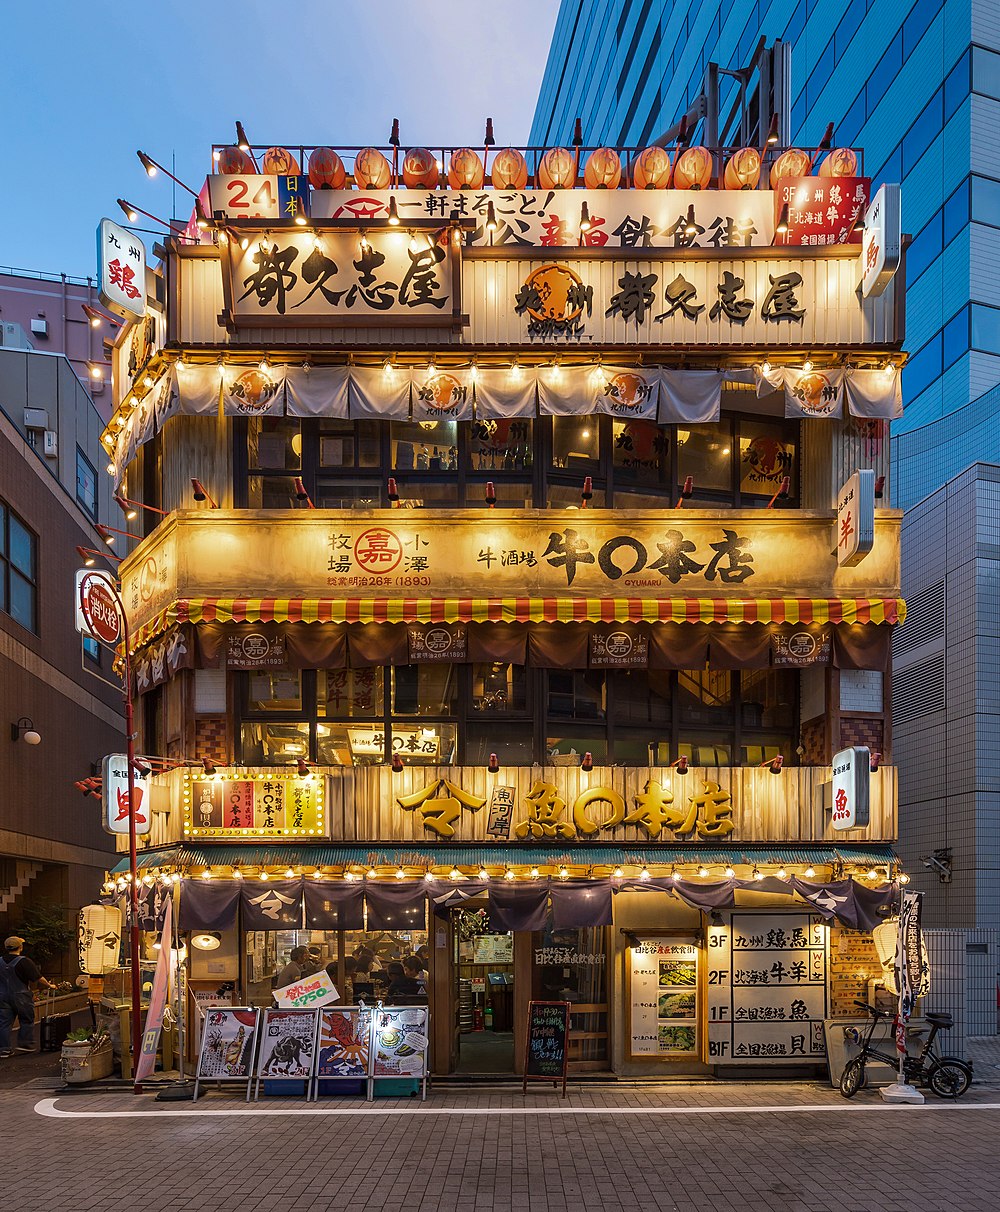 Illuminated facade of a 3-storey restaurant Chiyoda, Tokyo